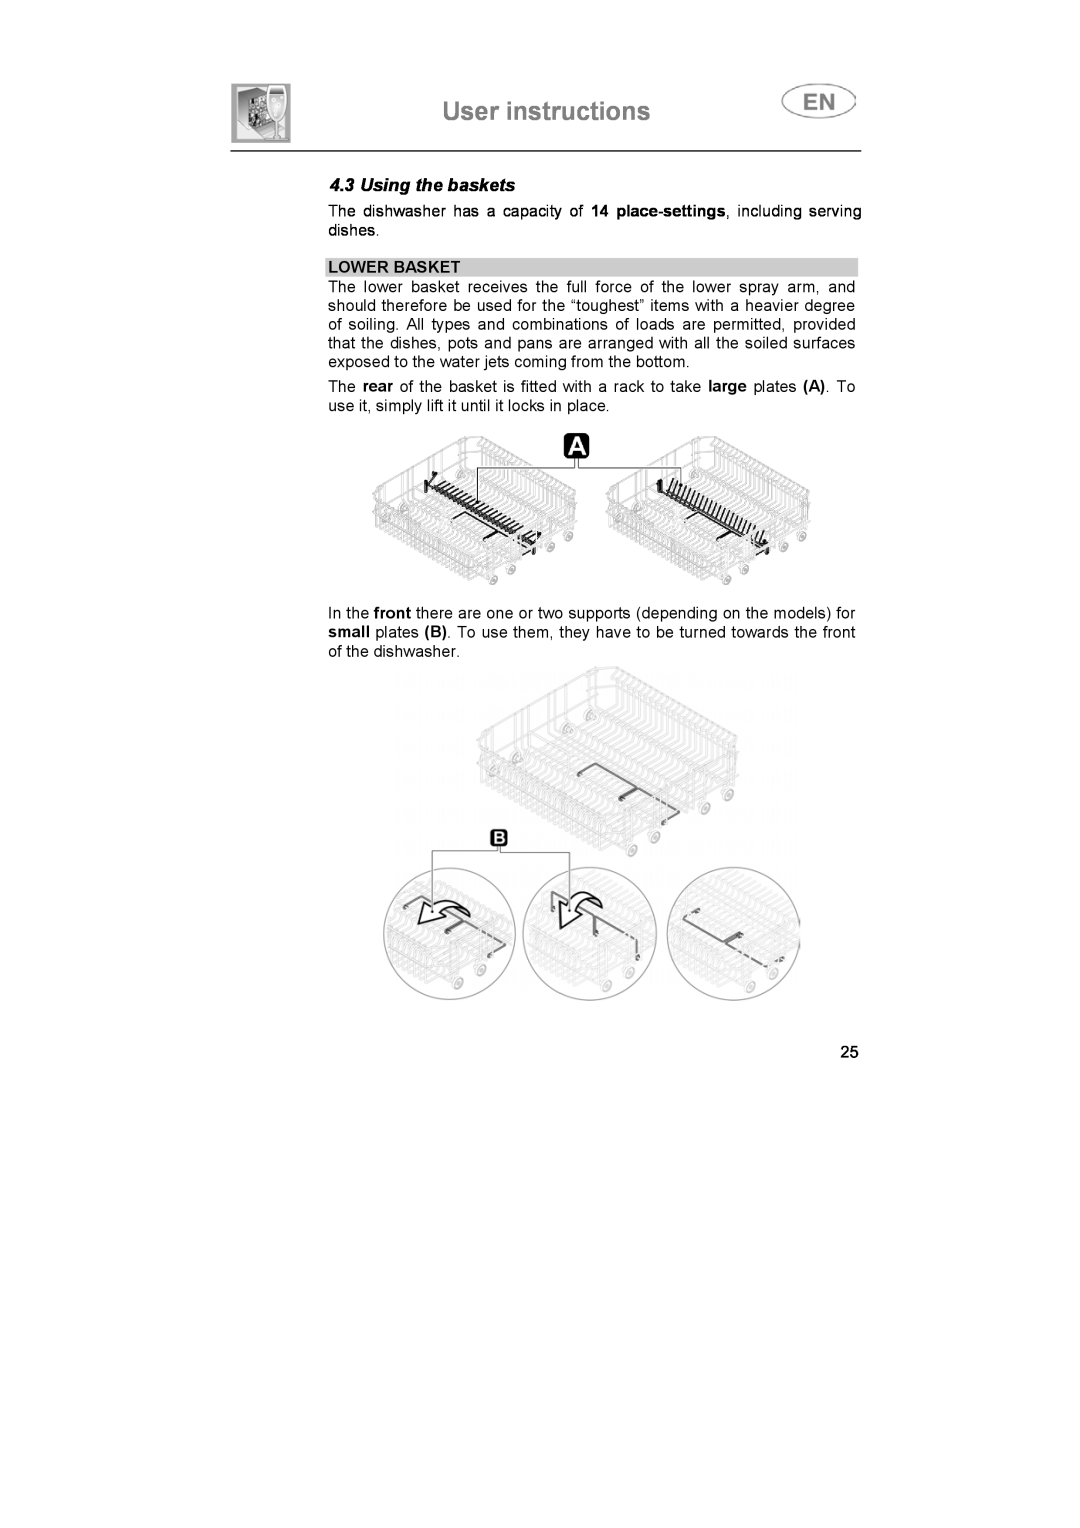 Smeg ST693-1 instruction manual User instructions, Using the baskets, Lower Basket 